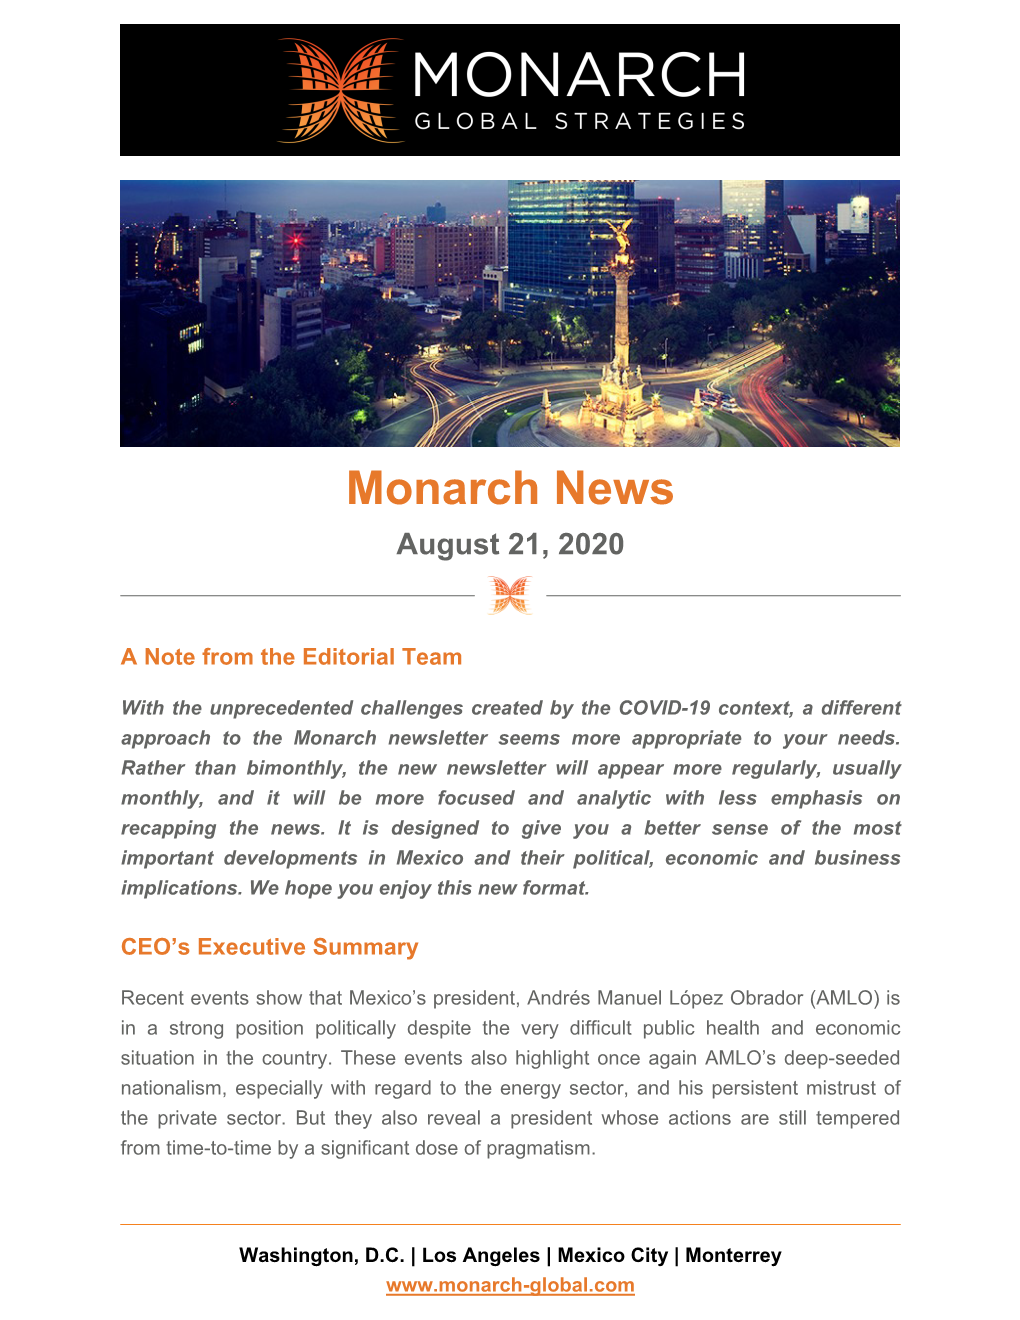 Monarch News August 21, 2020